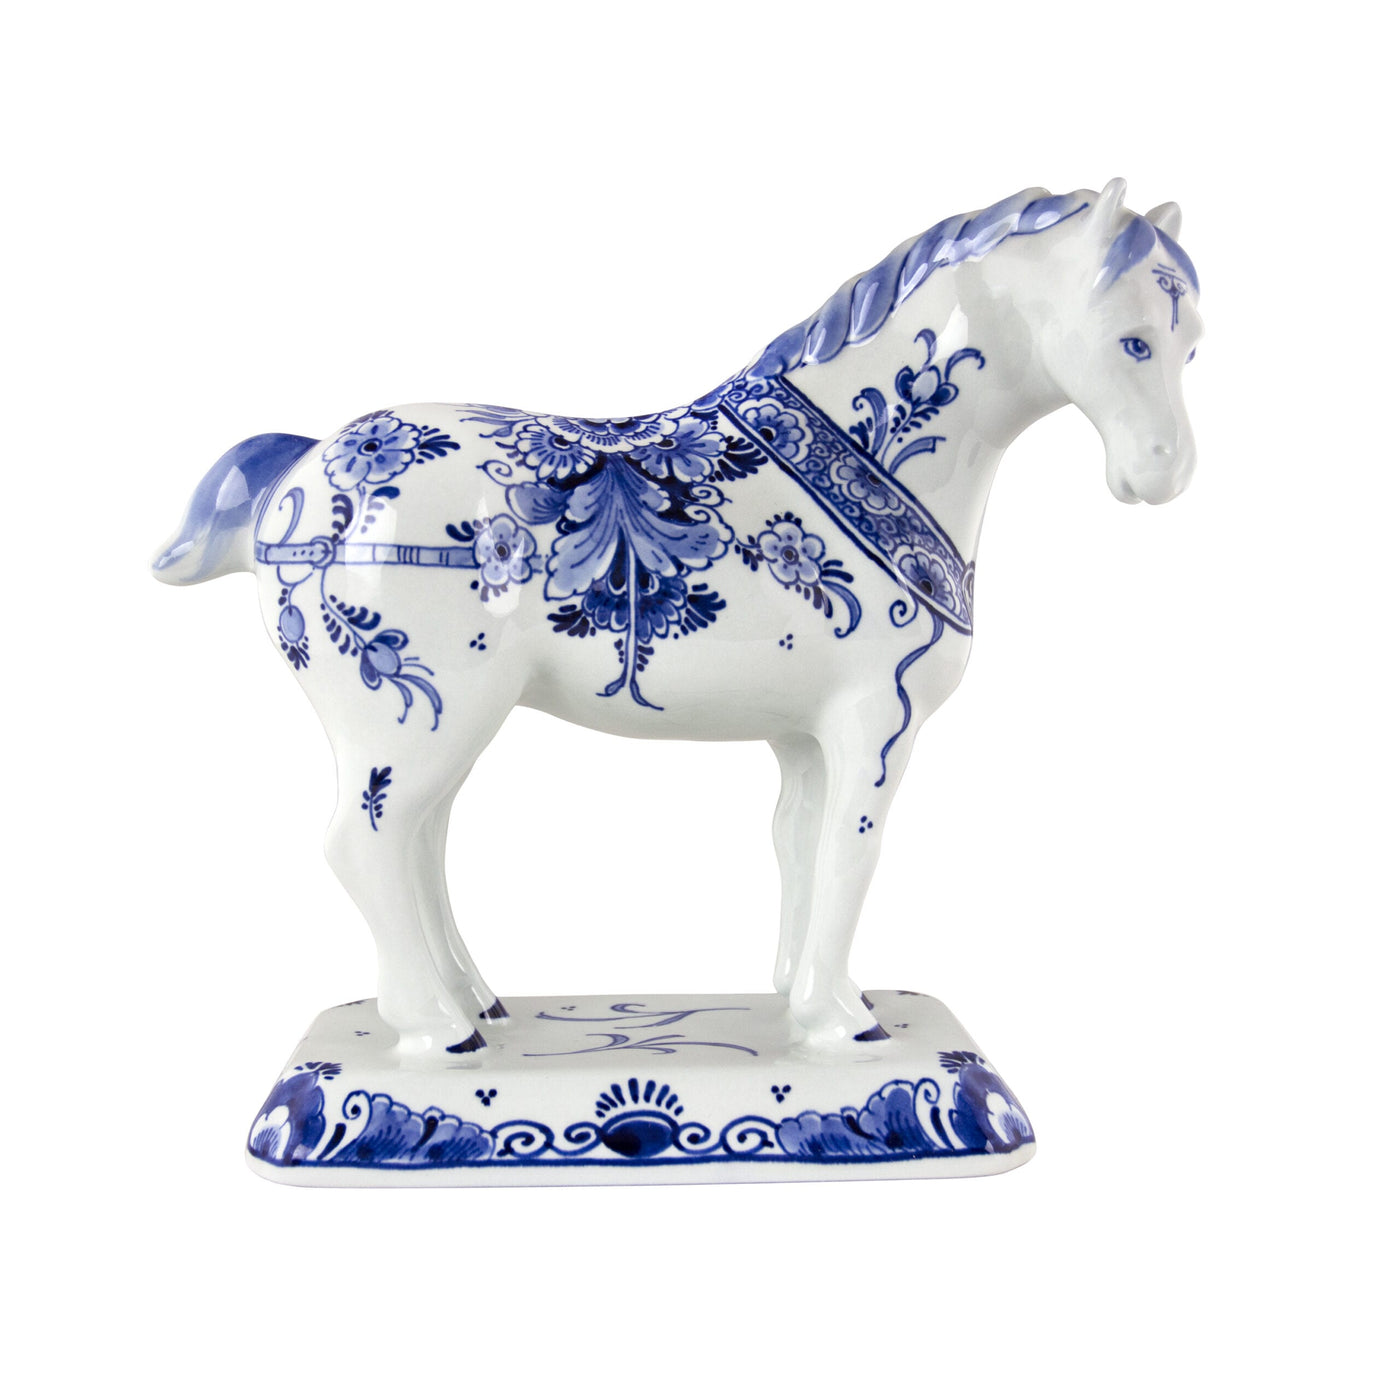 The Original Blue Horse Royal Delft